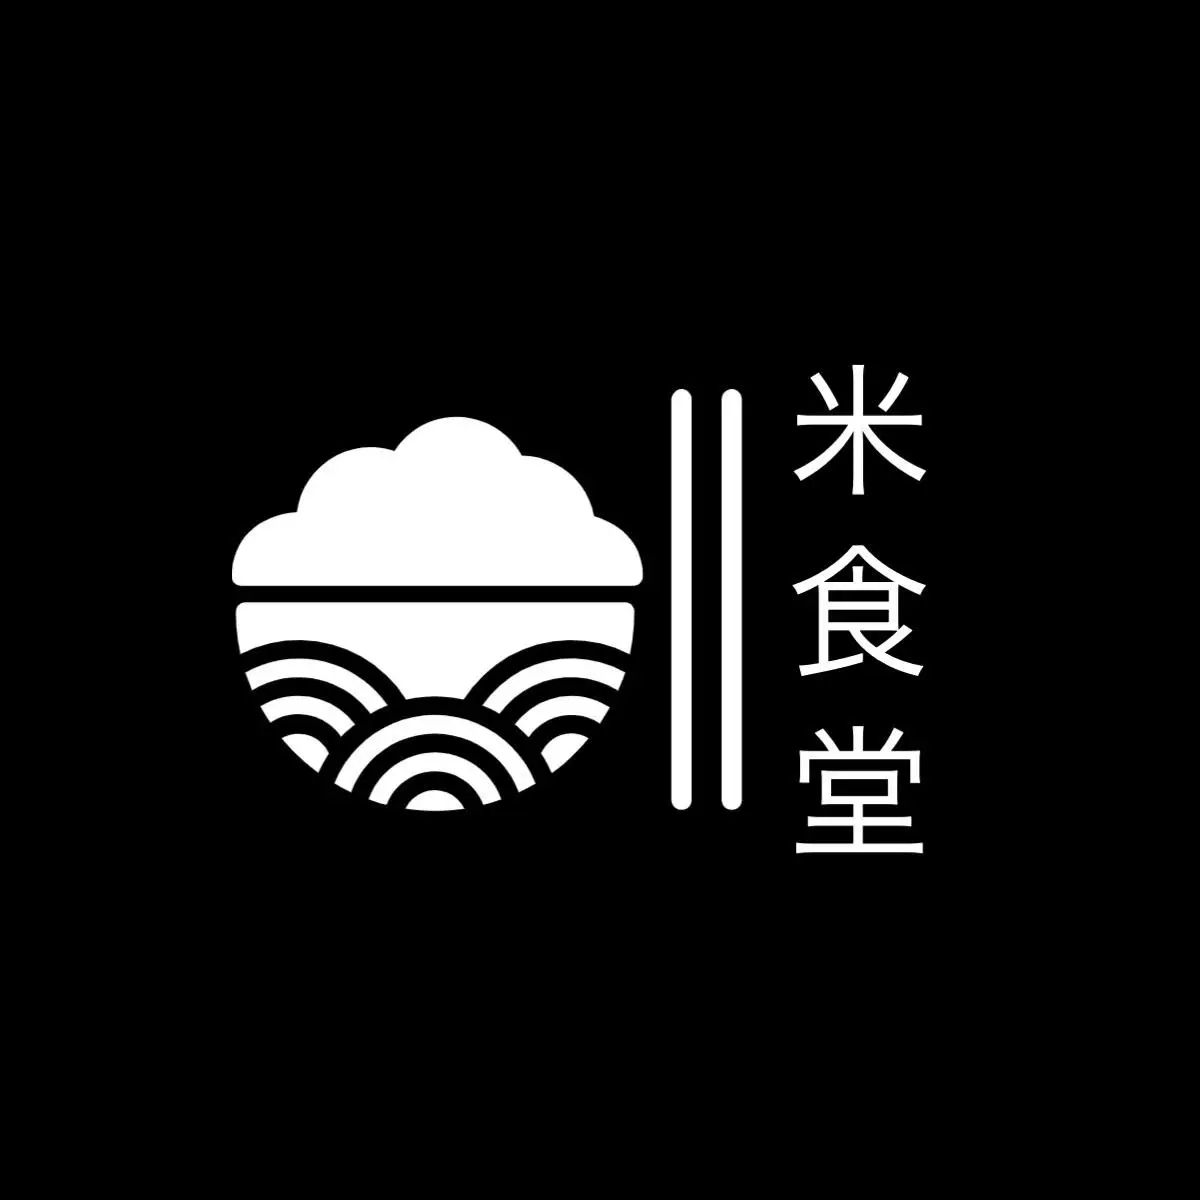 Rice cafeteria logo